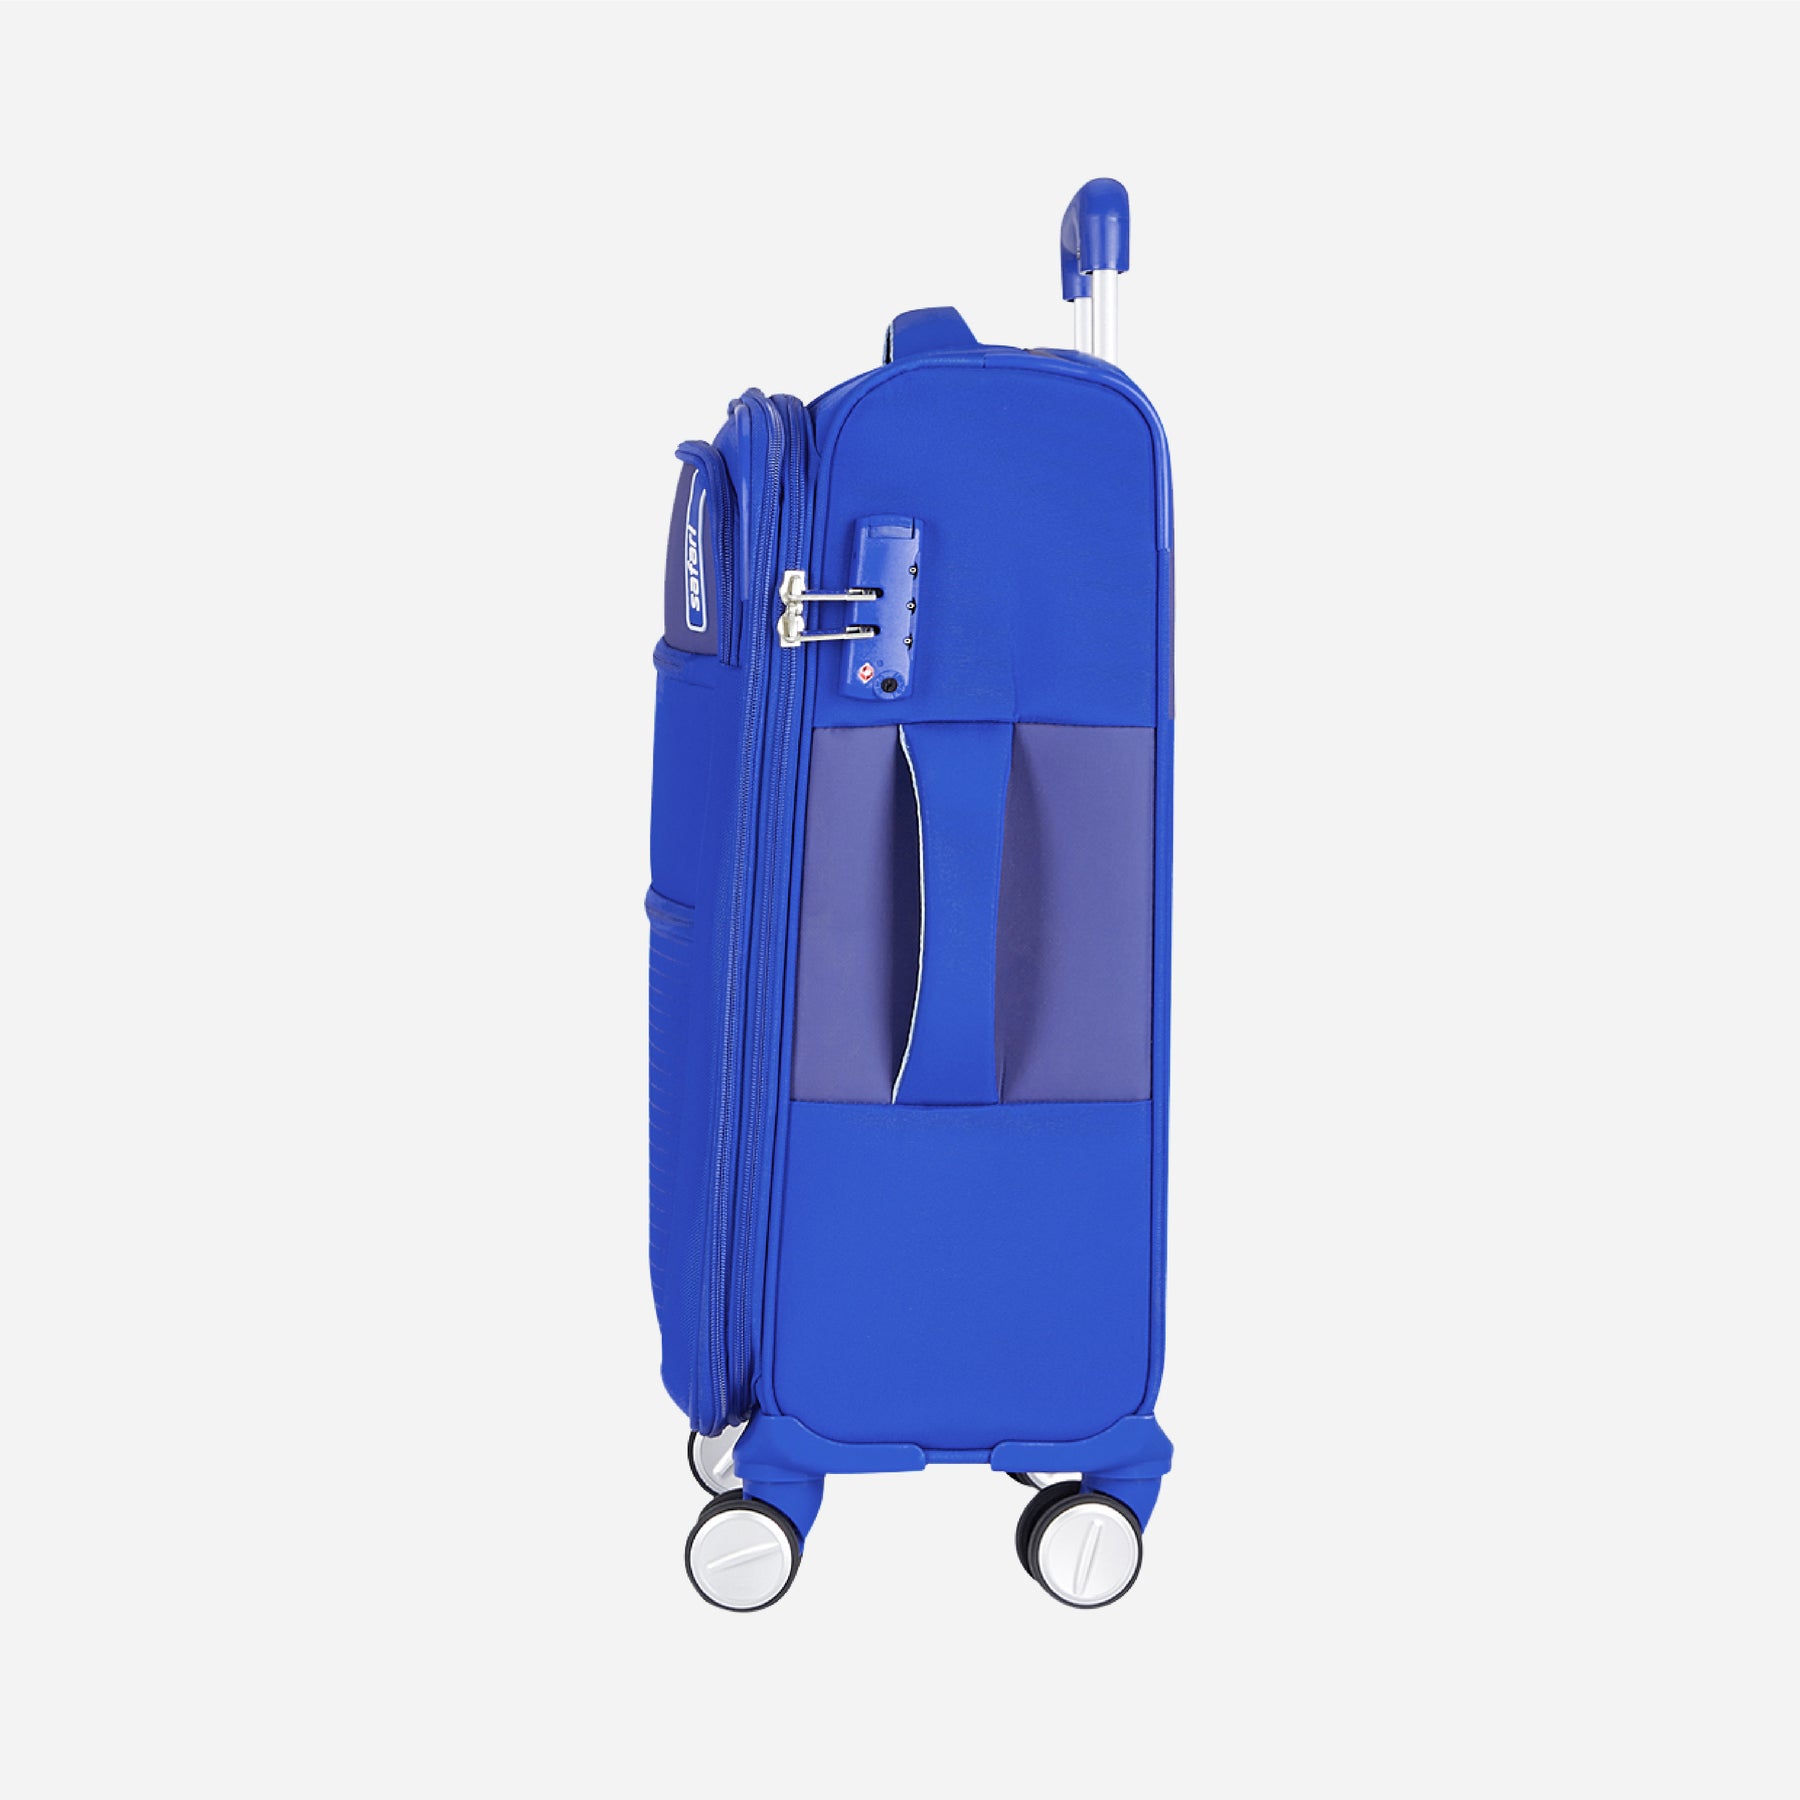 Jetsetter Anti Theft Expandable Soft Luggage with Securi Zipper, TSA lock and Dual Wheels - Blue